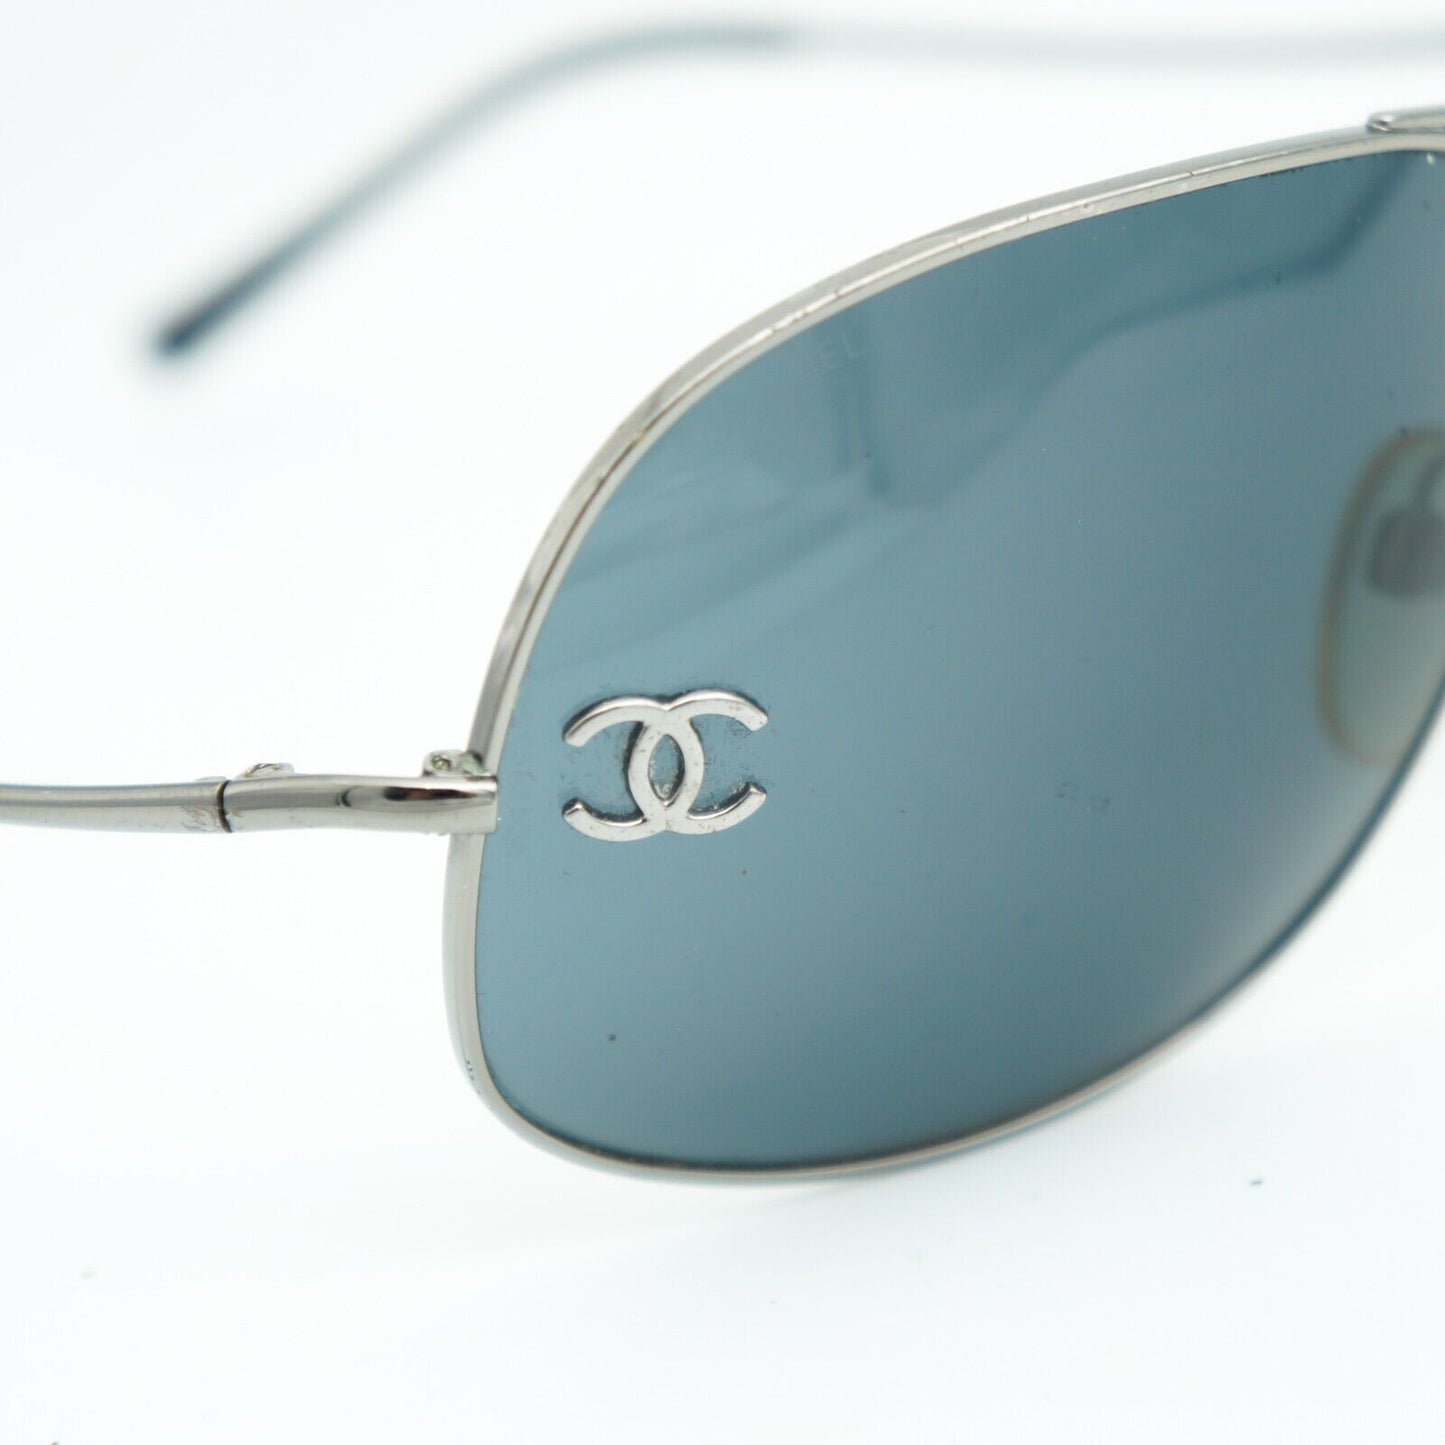 CHANEL 4132 Aviator Silver Sunglasses Vintage 00s